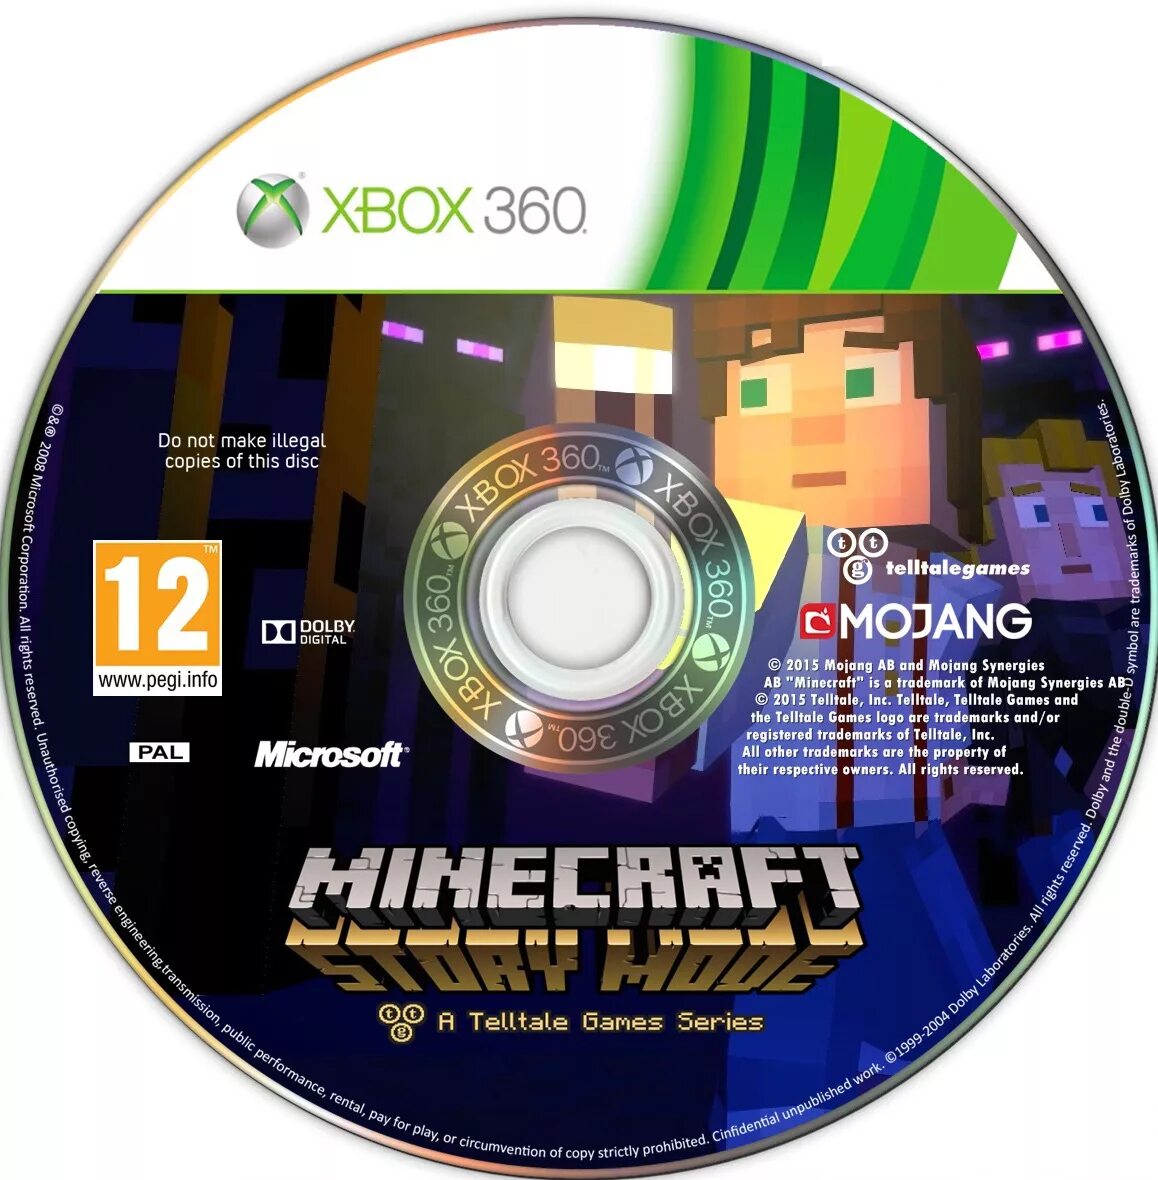 Диск игра майнкрафт. Дики для х бокс 360 майнкрафт. Диск майнкрафт на Xbox 360. Диск МАЙНКРАФТА на Икс бокс 360. Xbox 360 Minecraft Disc.